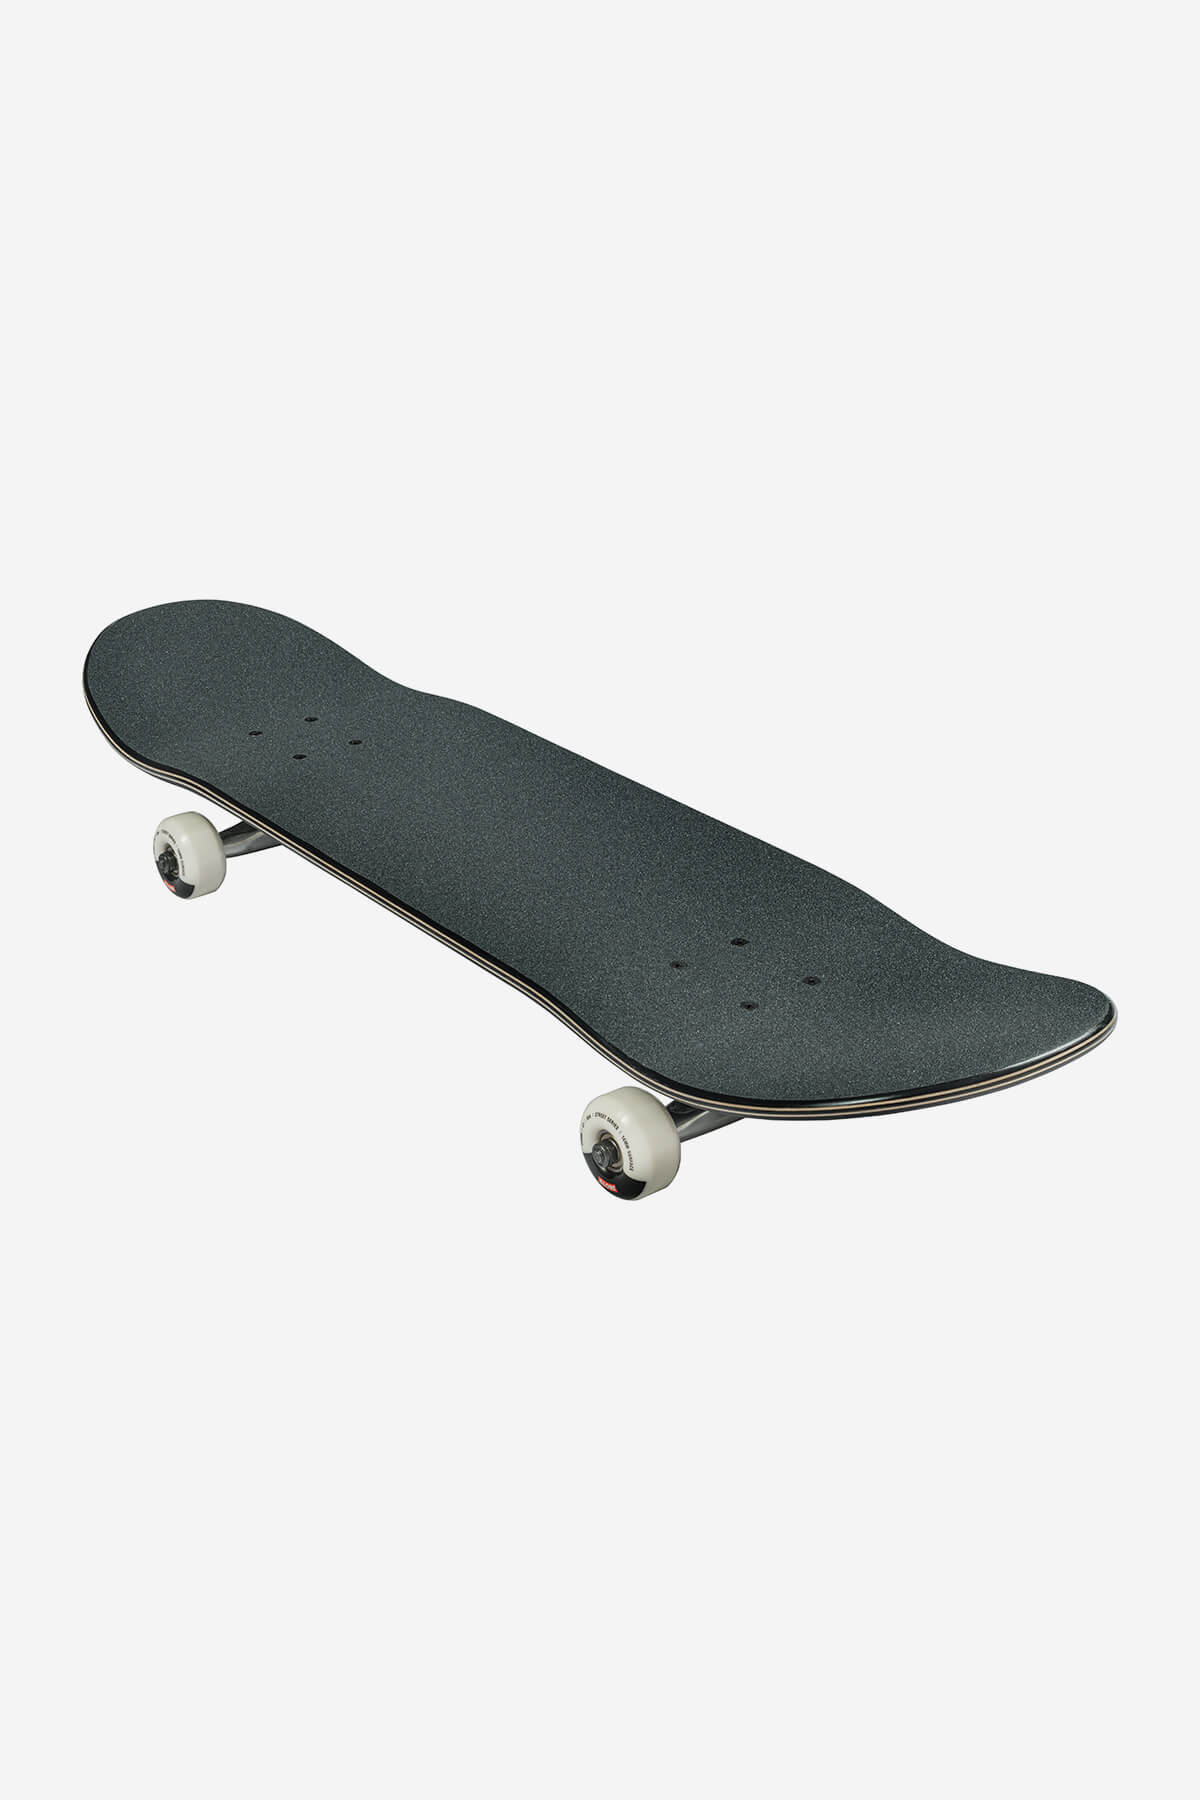 Globe - G1 Argo - Negro/Camo - 8.125" Completo Skateboard